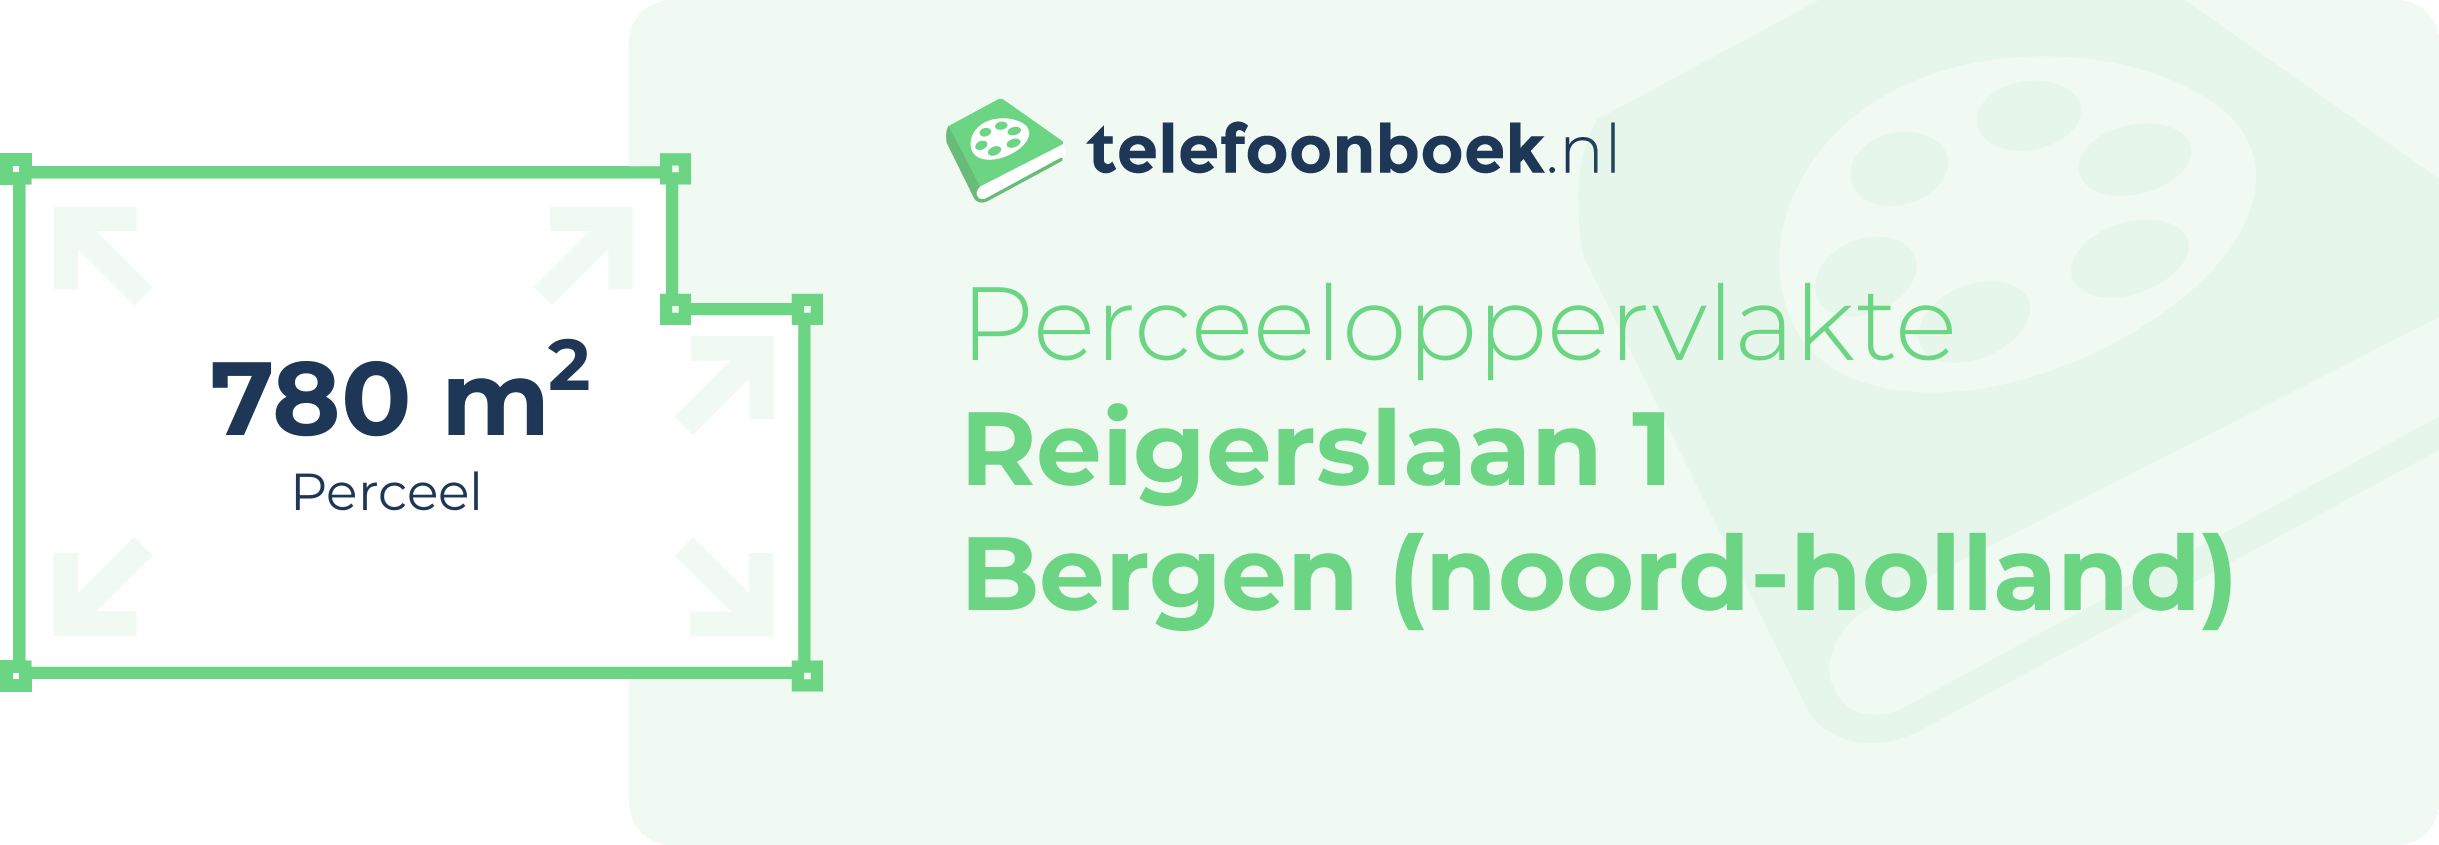 Perceeloppervlakte Reigerslaan 1 Bergen (Noord-Holland)